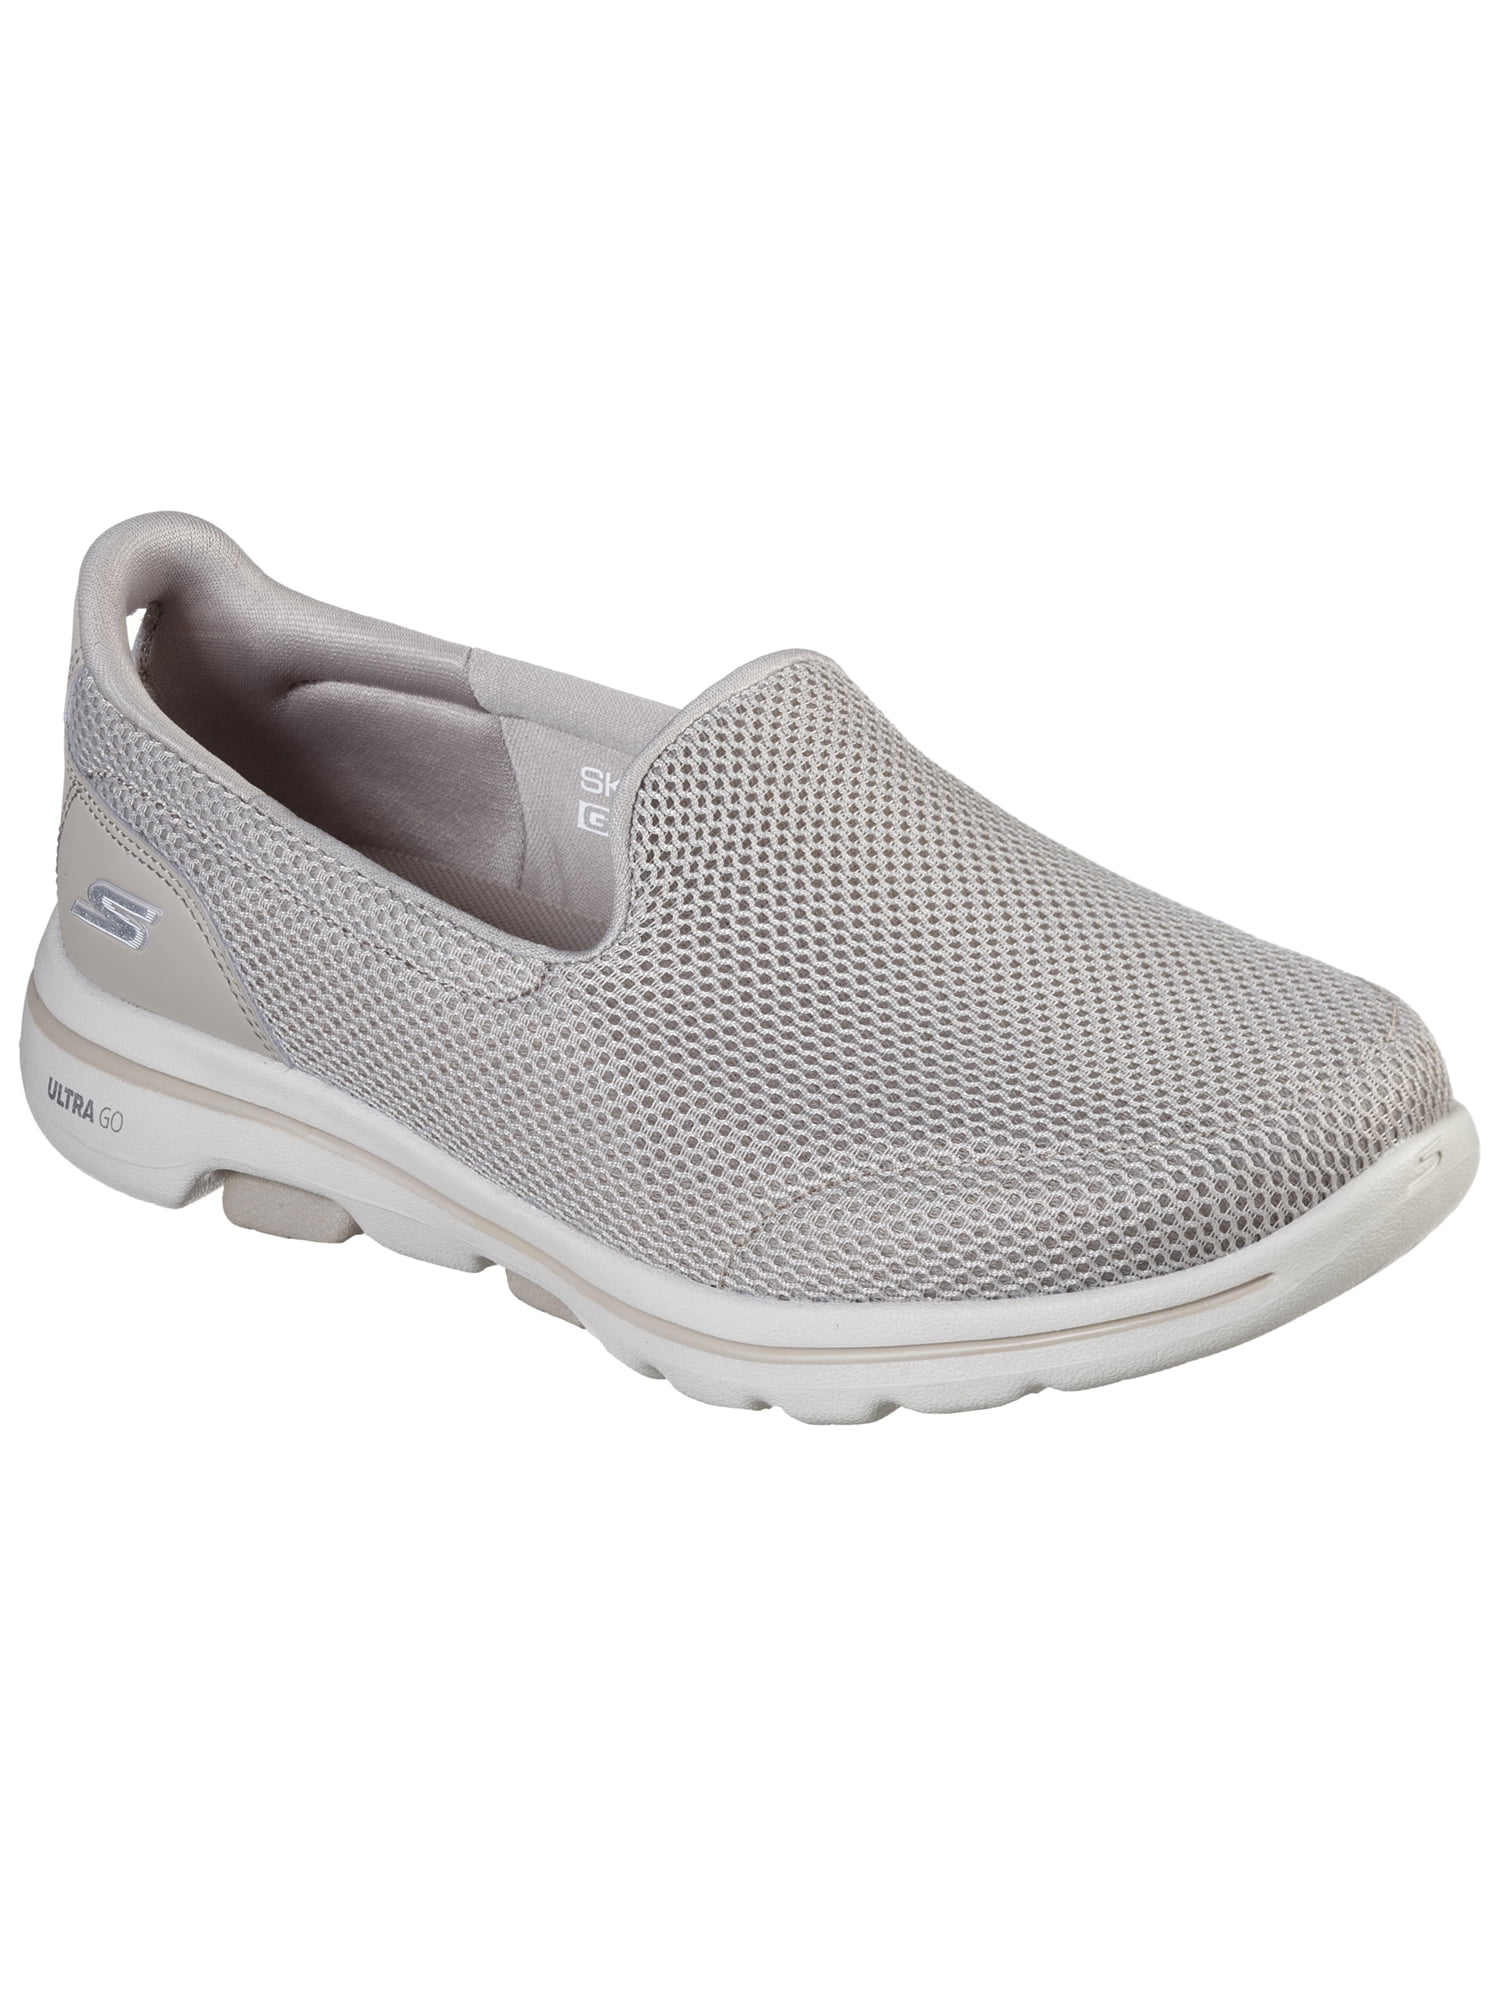 Buy GARNATE Grey Men's Running Shoes online | Campus Shoes